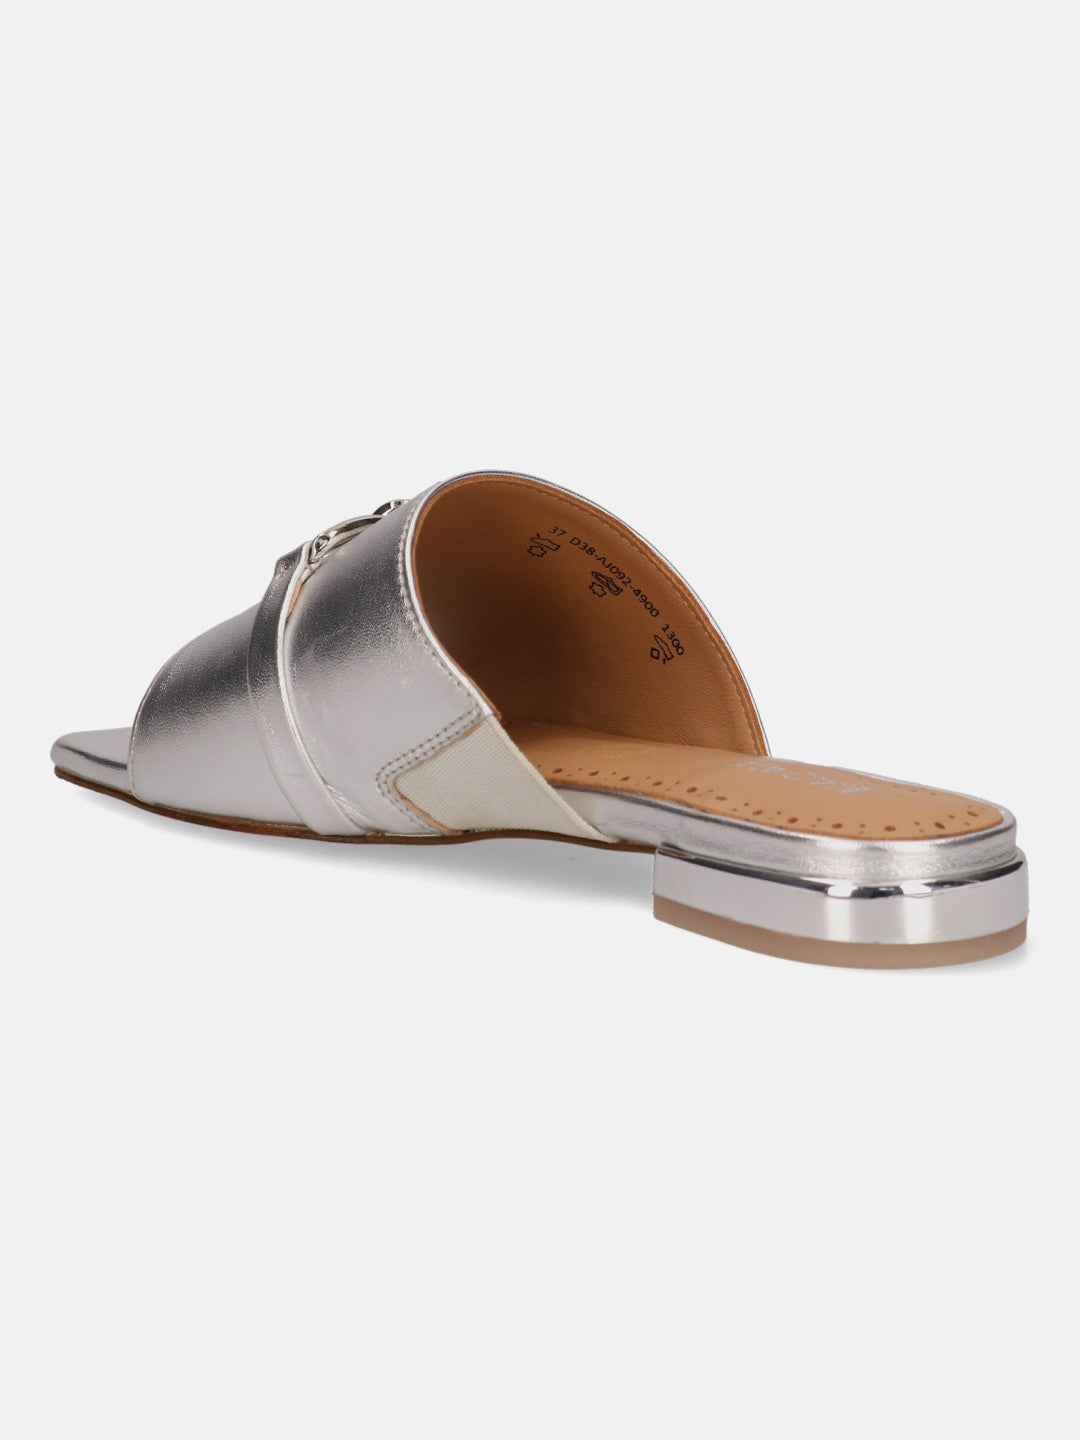 Glaze Silver Leather Sandals